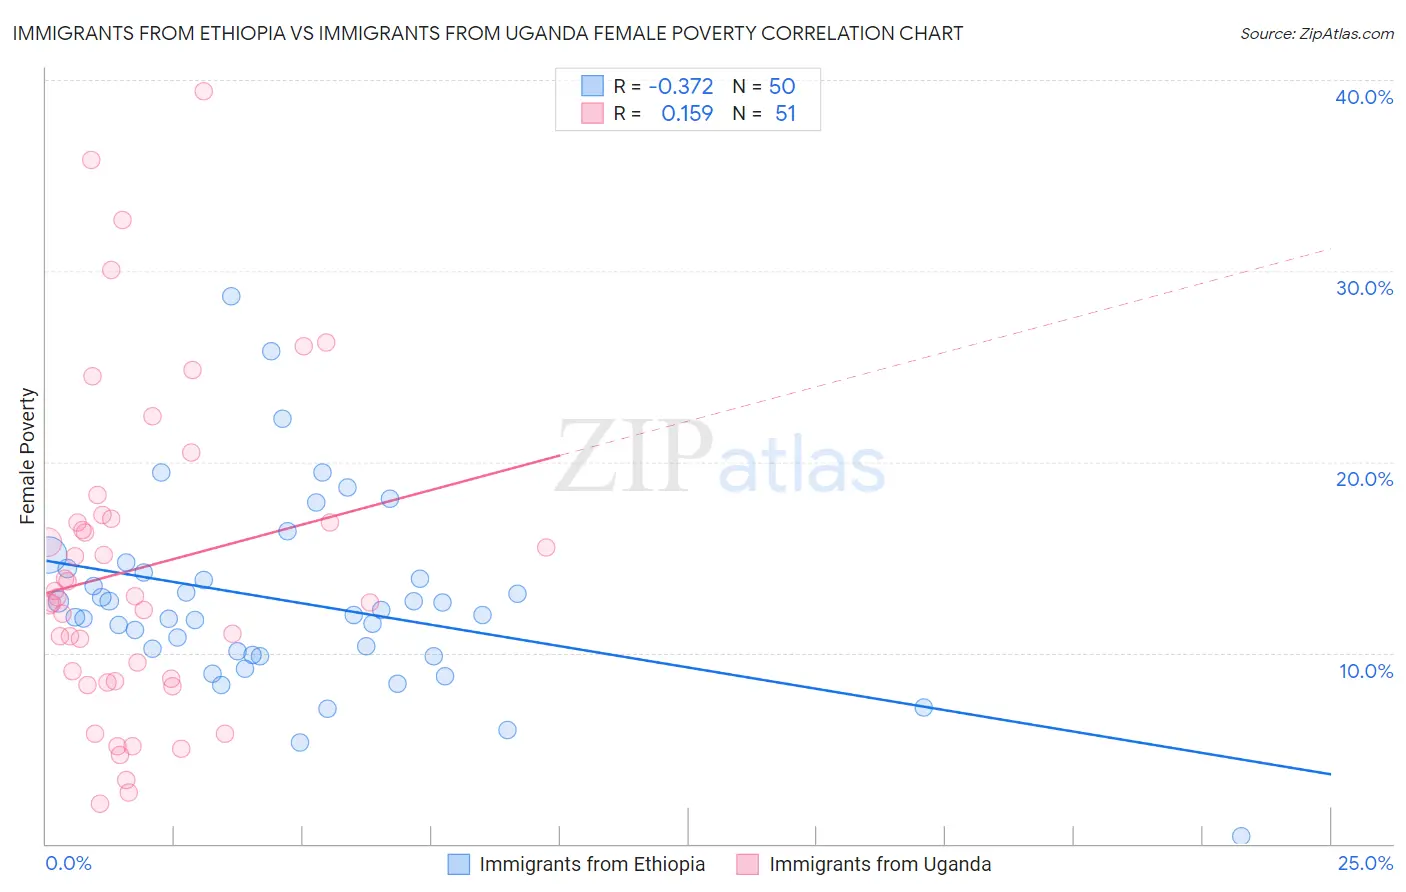 Immigrants from Ethiopia vs Immigrants from Uganda Female Poverty